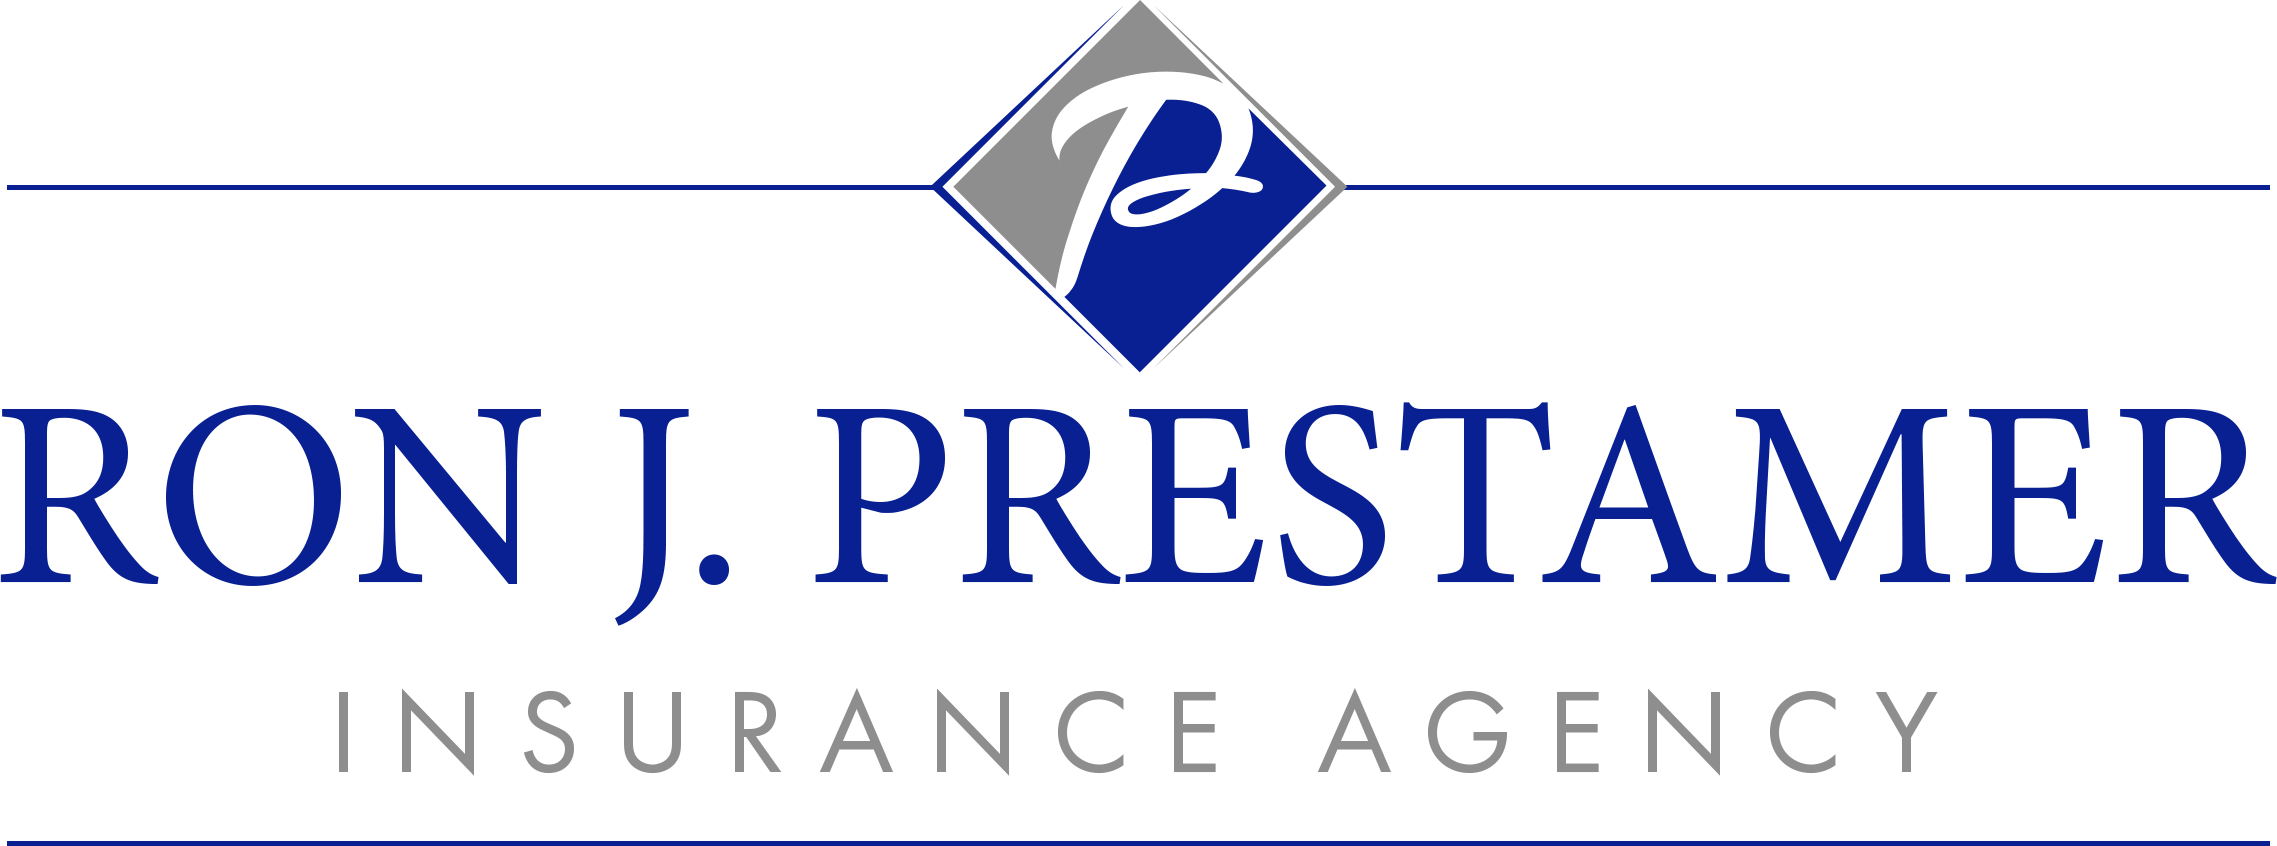 Ron J. Prestamer Insurance Agency, Inc. of Hammond